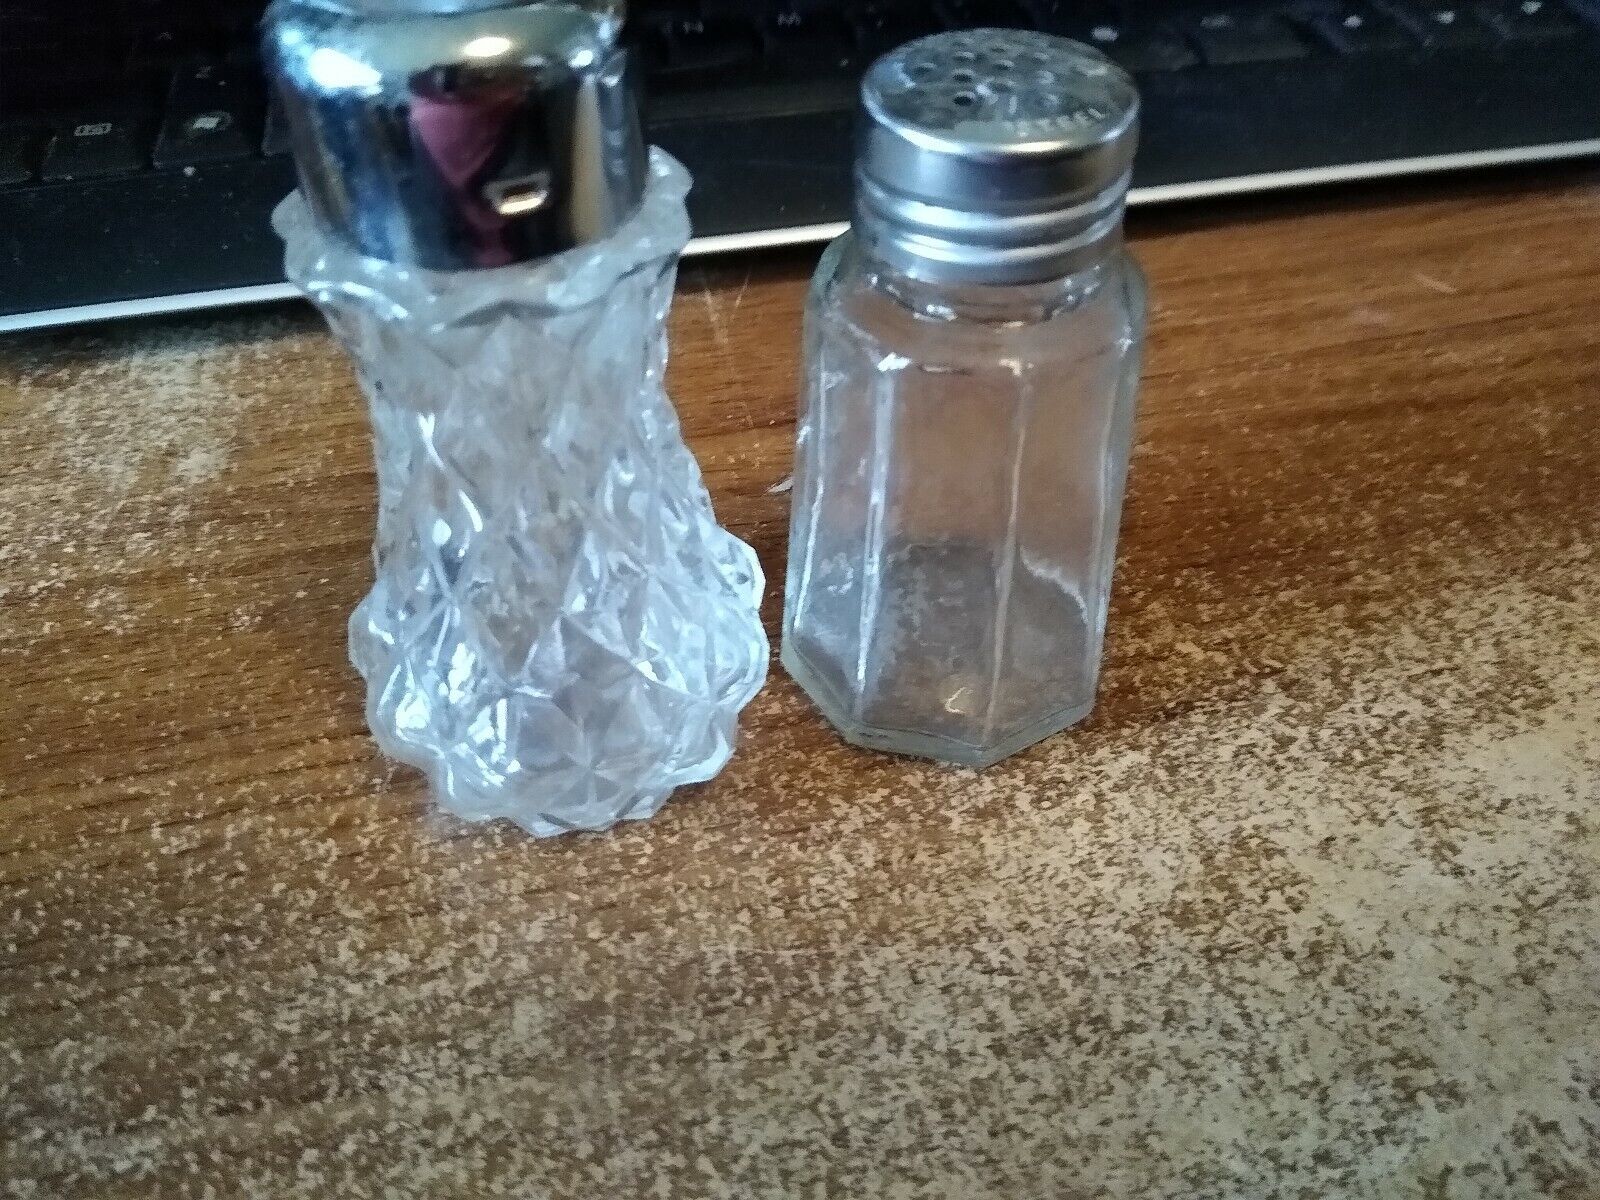 2 clear glass salt shaker, 1 Gemco, 1 diamond shaped pressed glass - $3.96